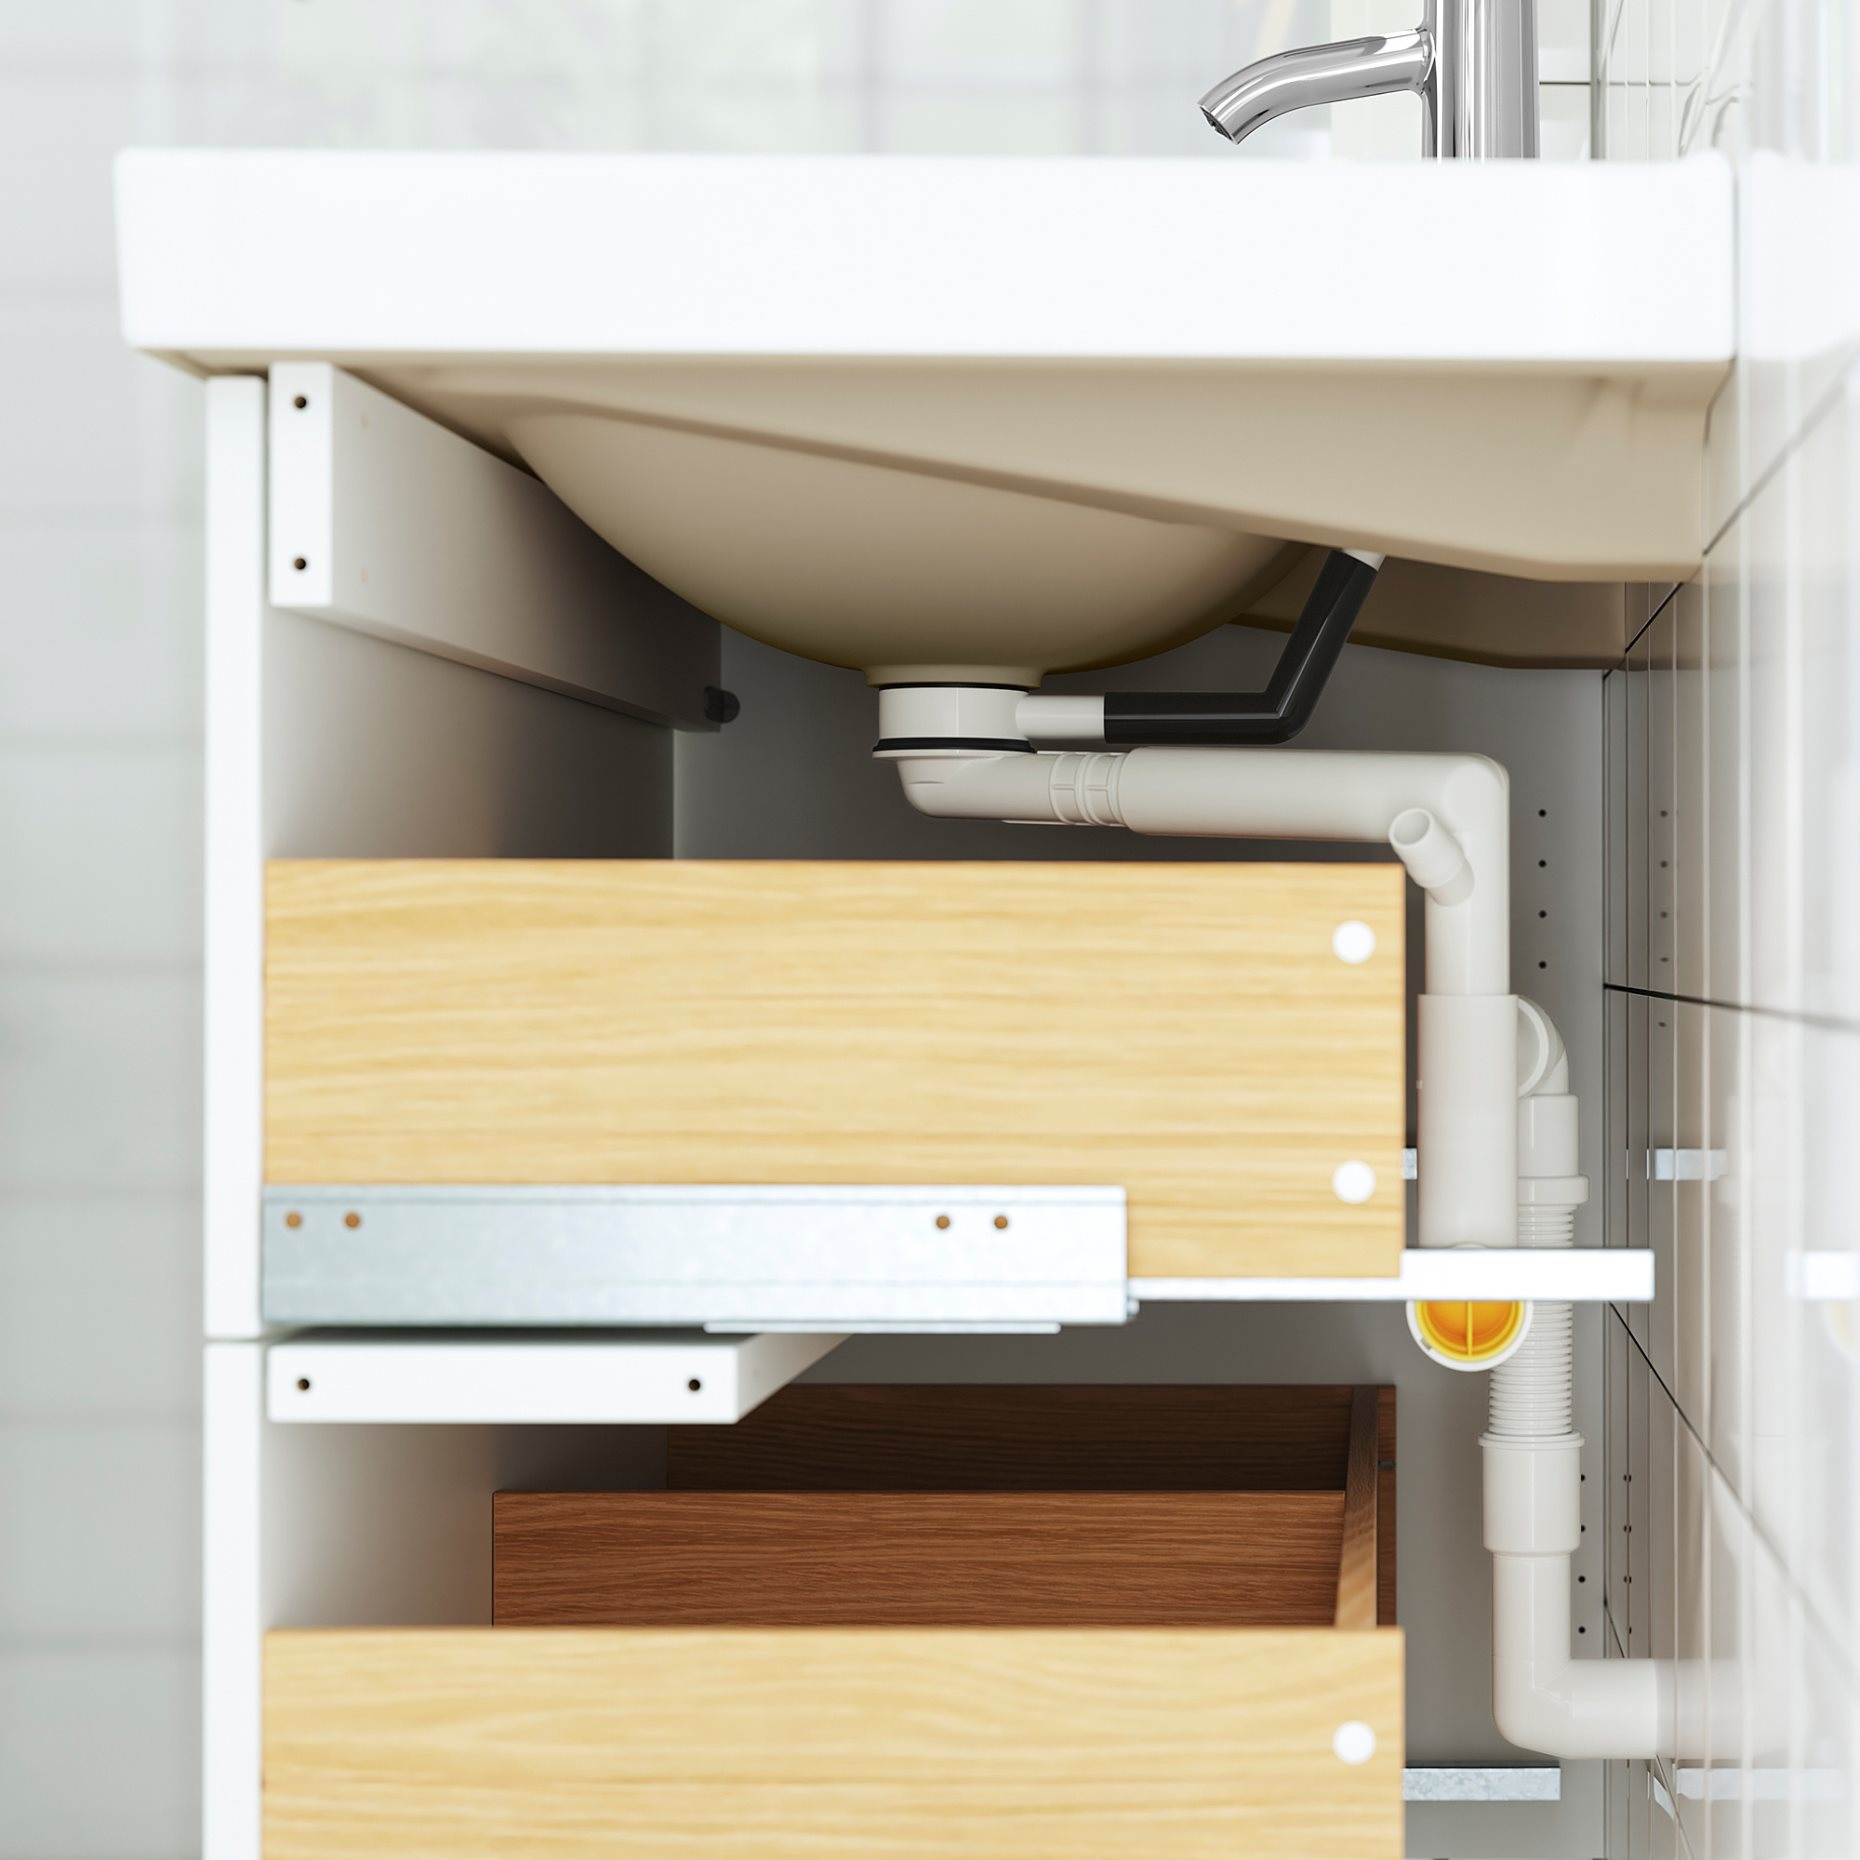 HAVBACK/ORRSJON, wash-stand with drawers/wash-basin/tap, 82x49x69 cm, 595.213.24